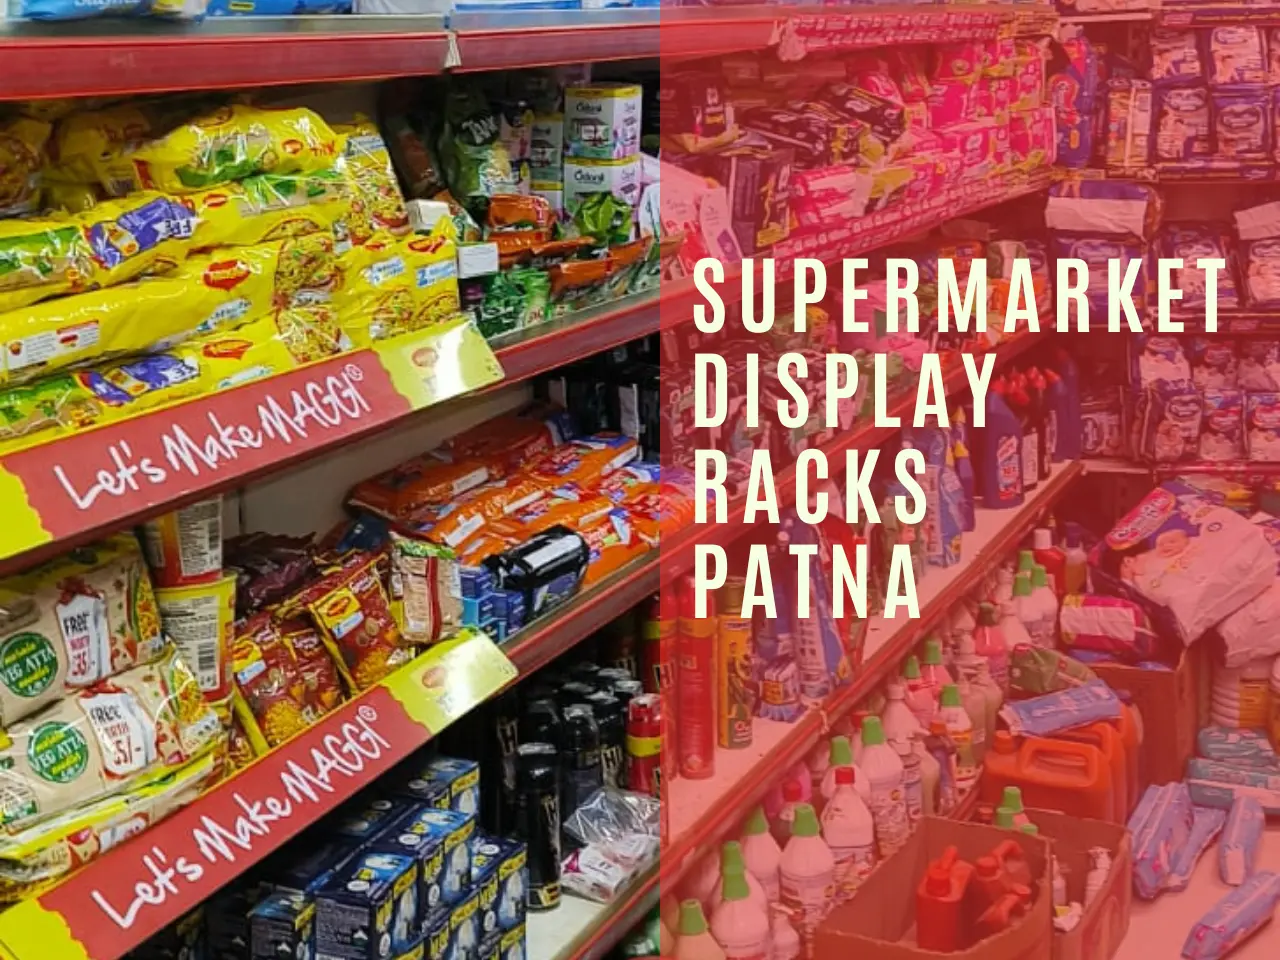 Supermarket display racks   Patna.webp